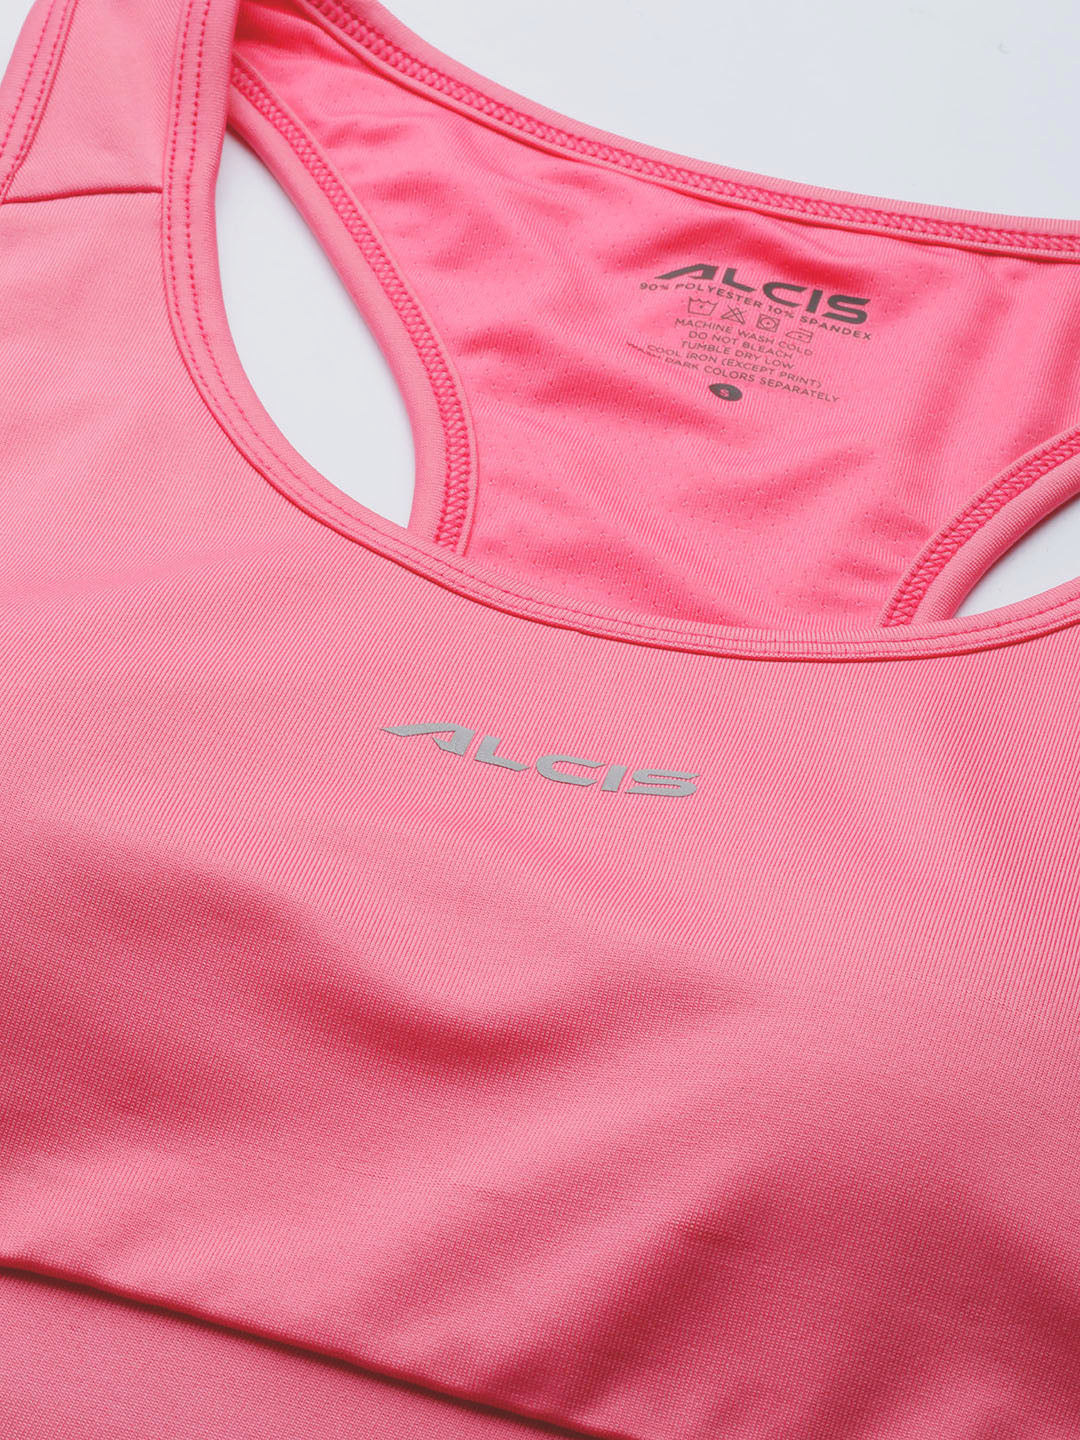 Alcis Pink Solid Drytech+ Sports Bra